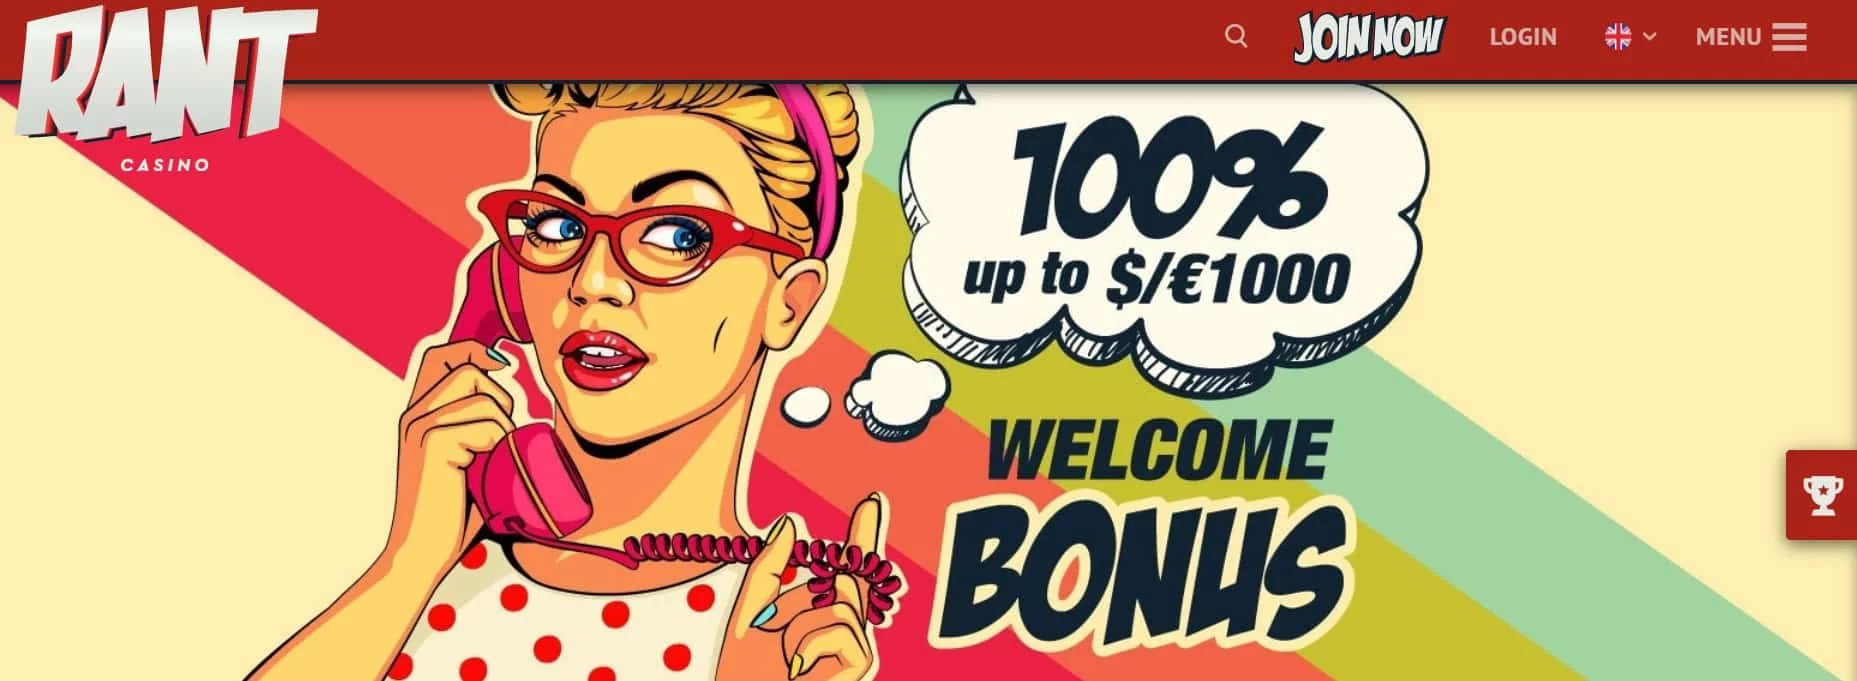 Rant Casino welcome bonus-min